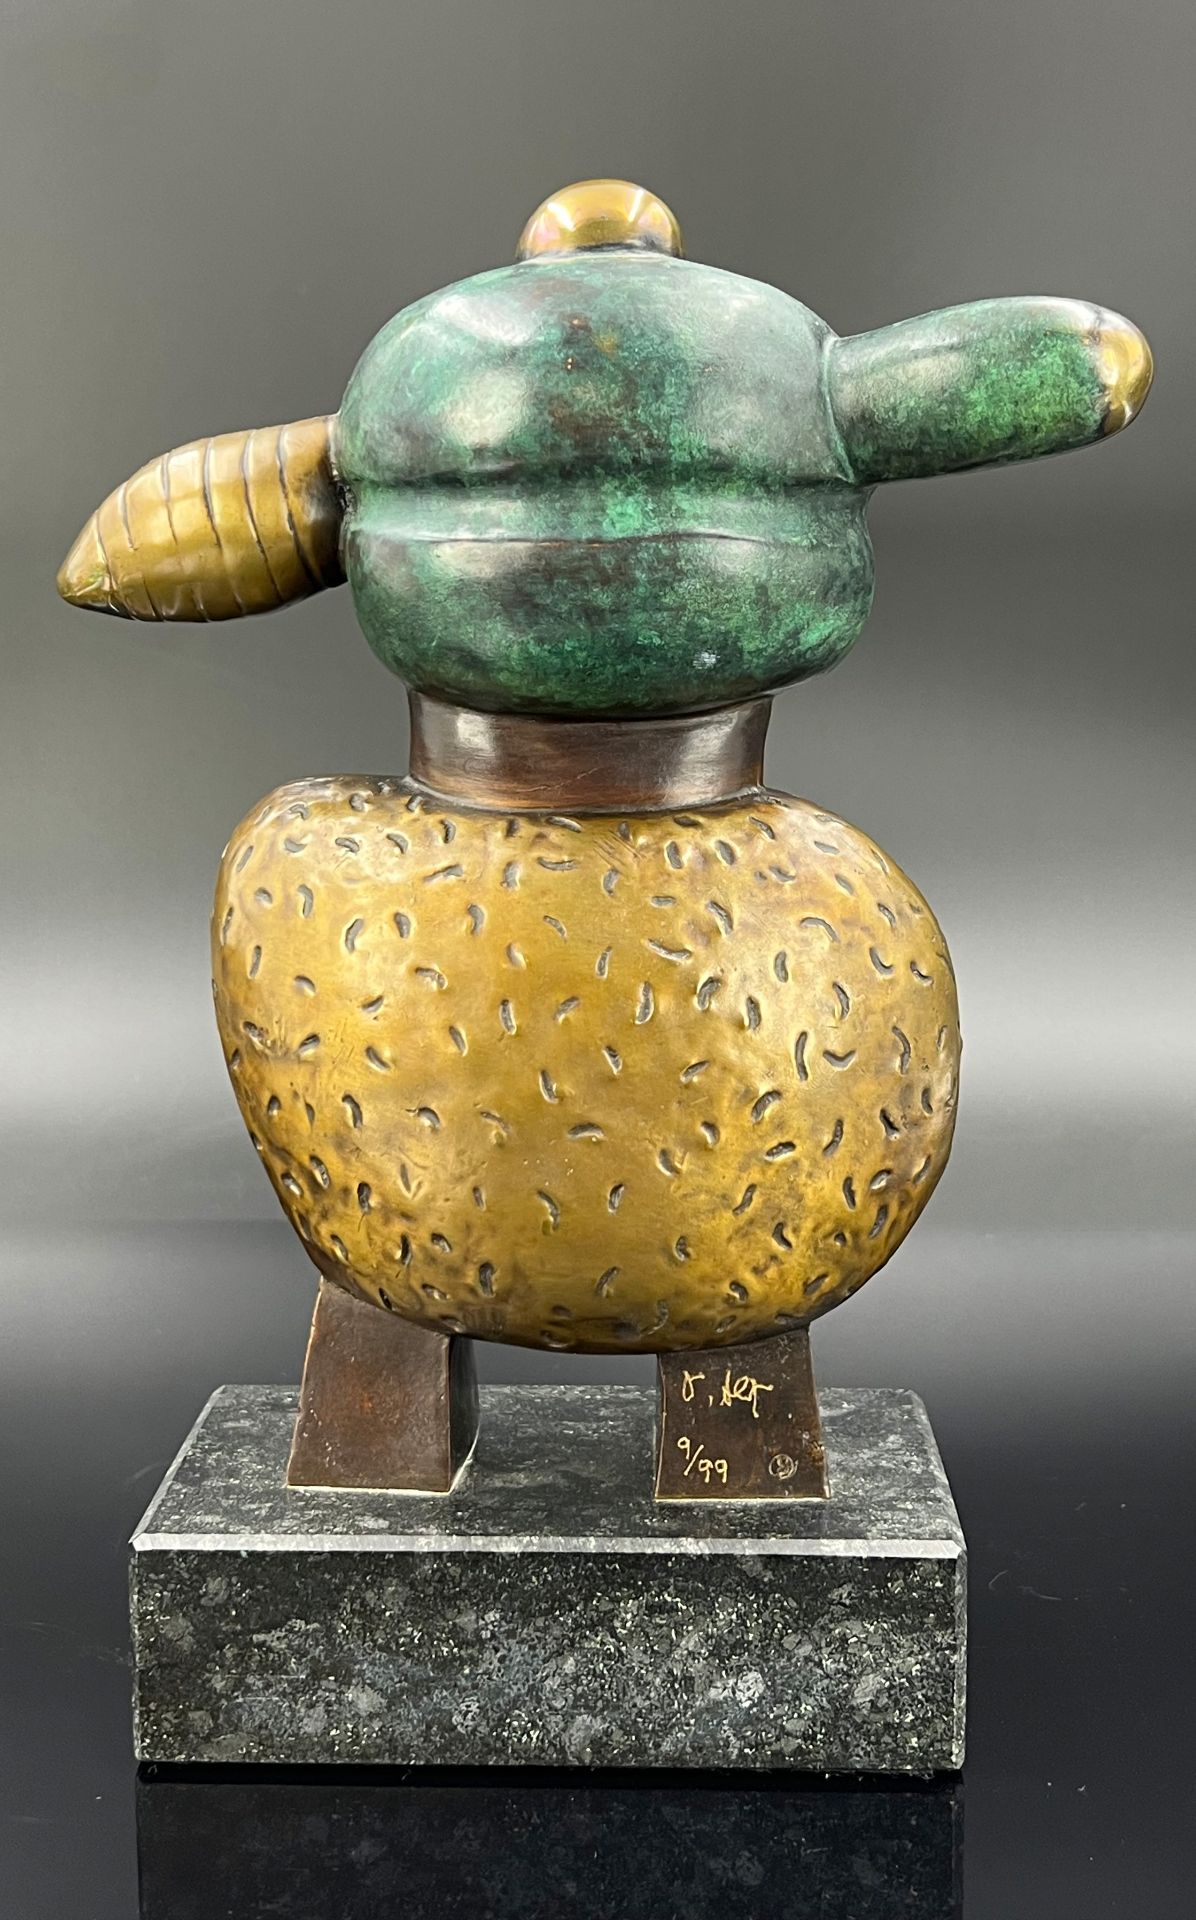 Otmar ALT (1940). Bronze. "King of the bees". 2005. - Image 3 of 8